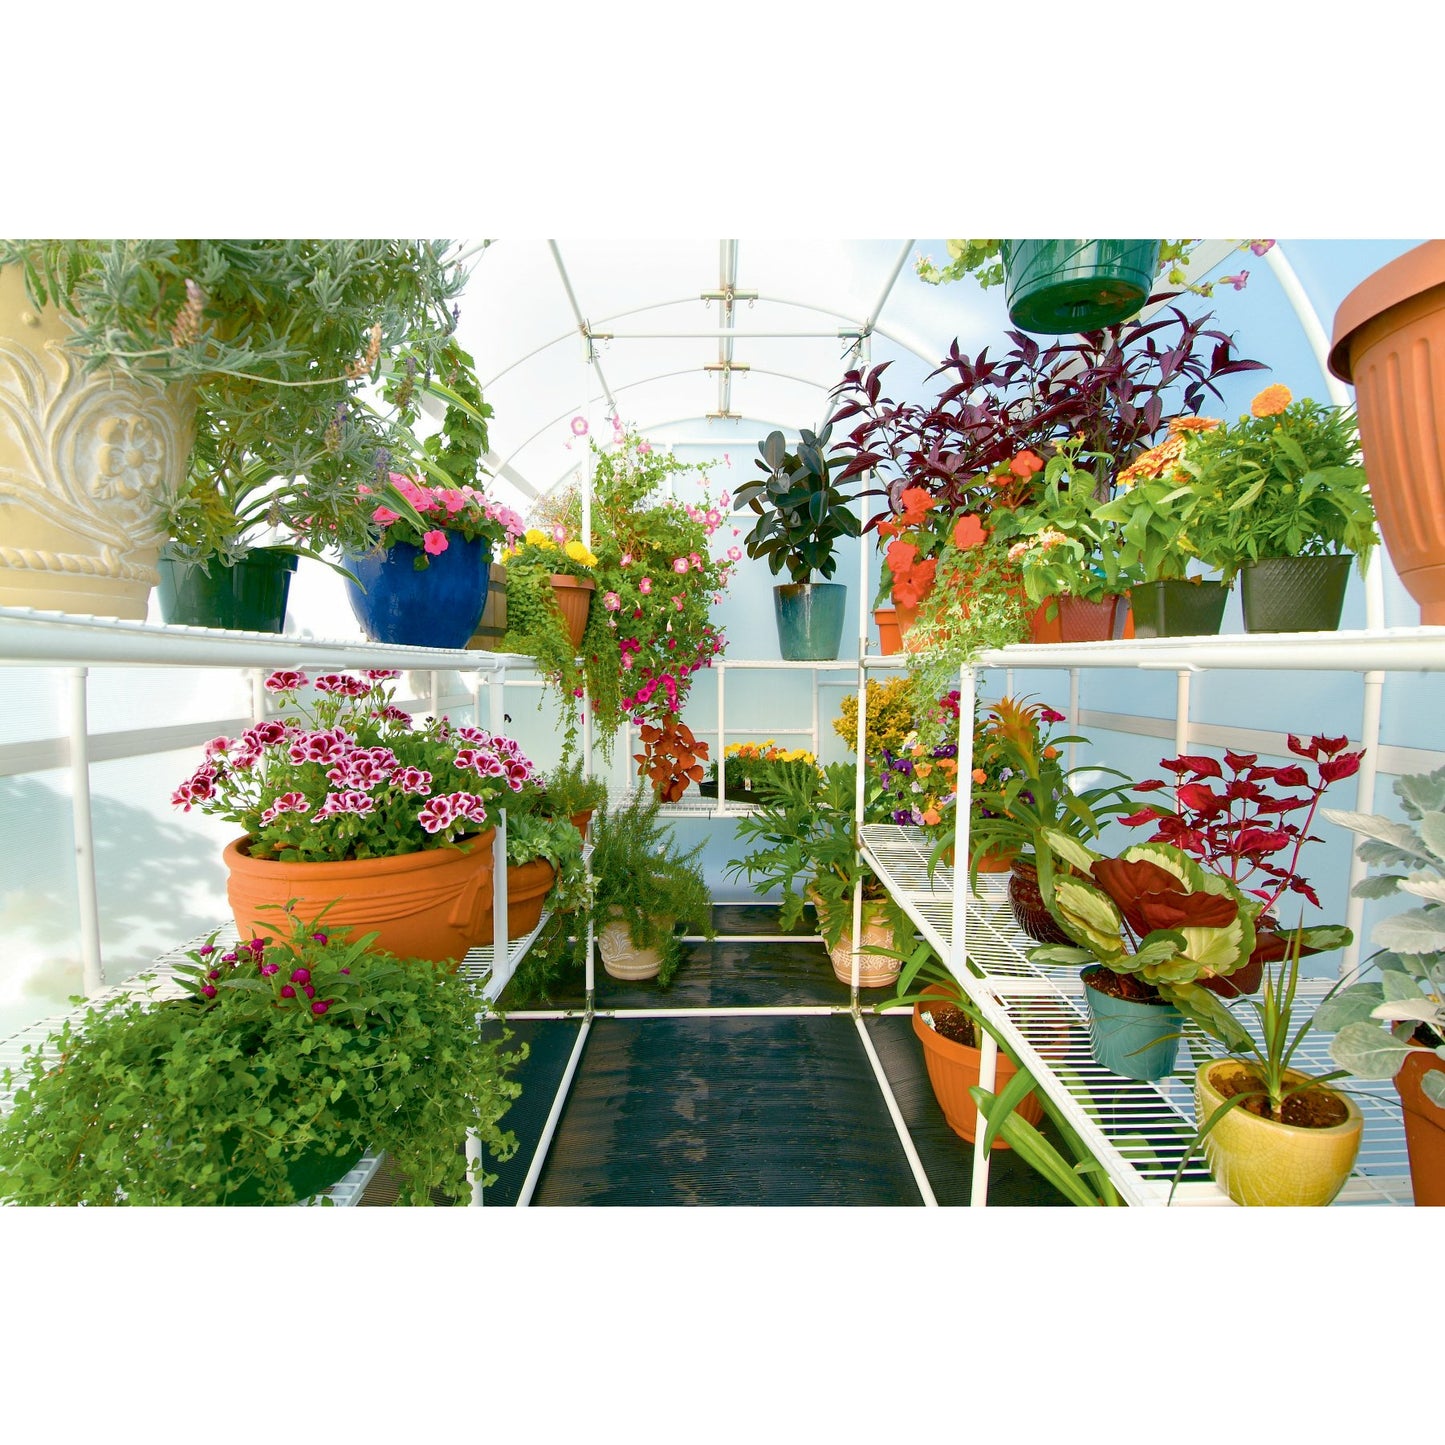 Solexx Gardener's Oasis Greenhouse 8'W x 12'L x 8'H